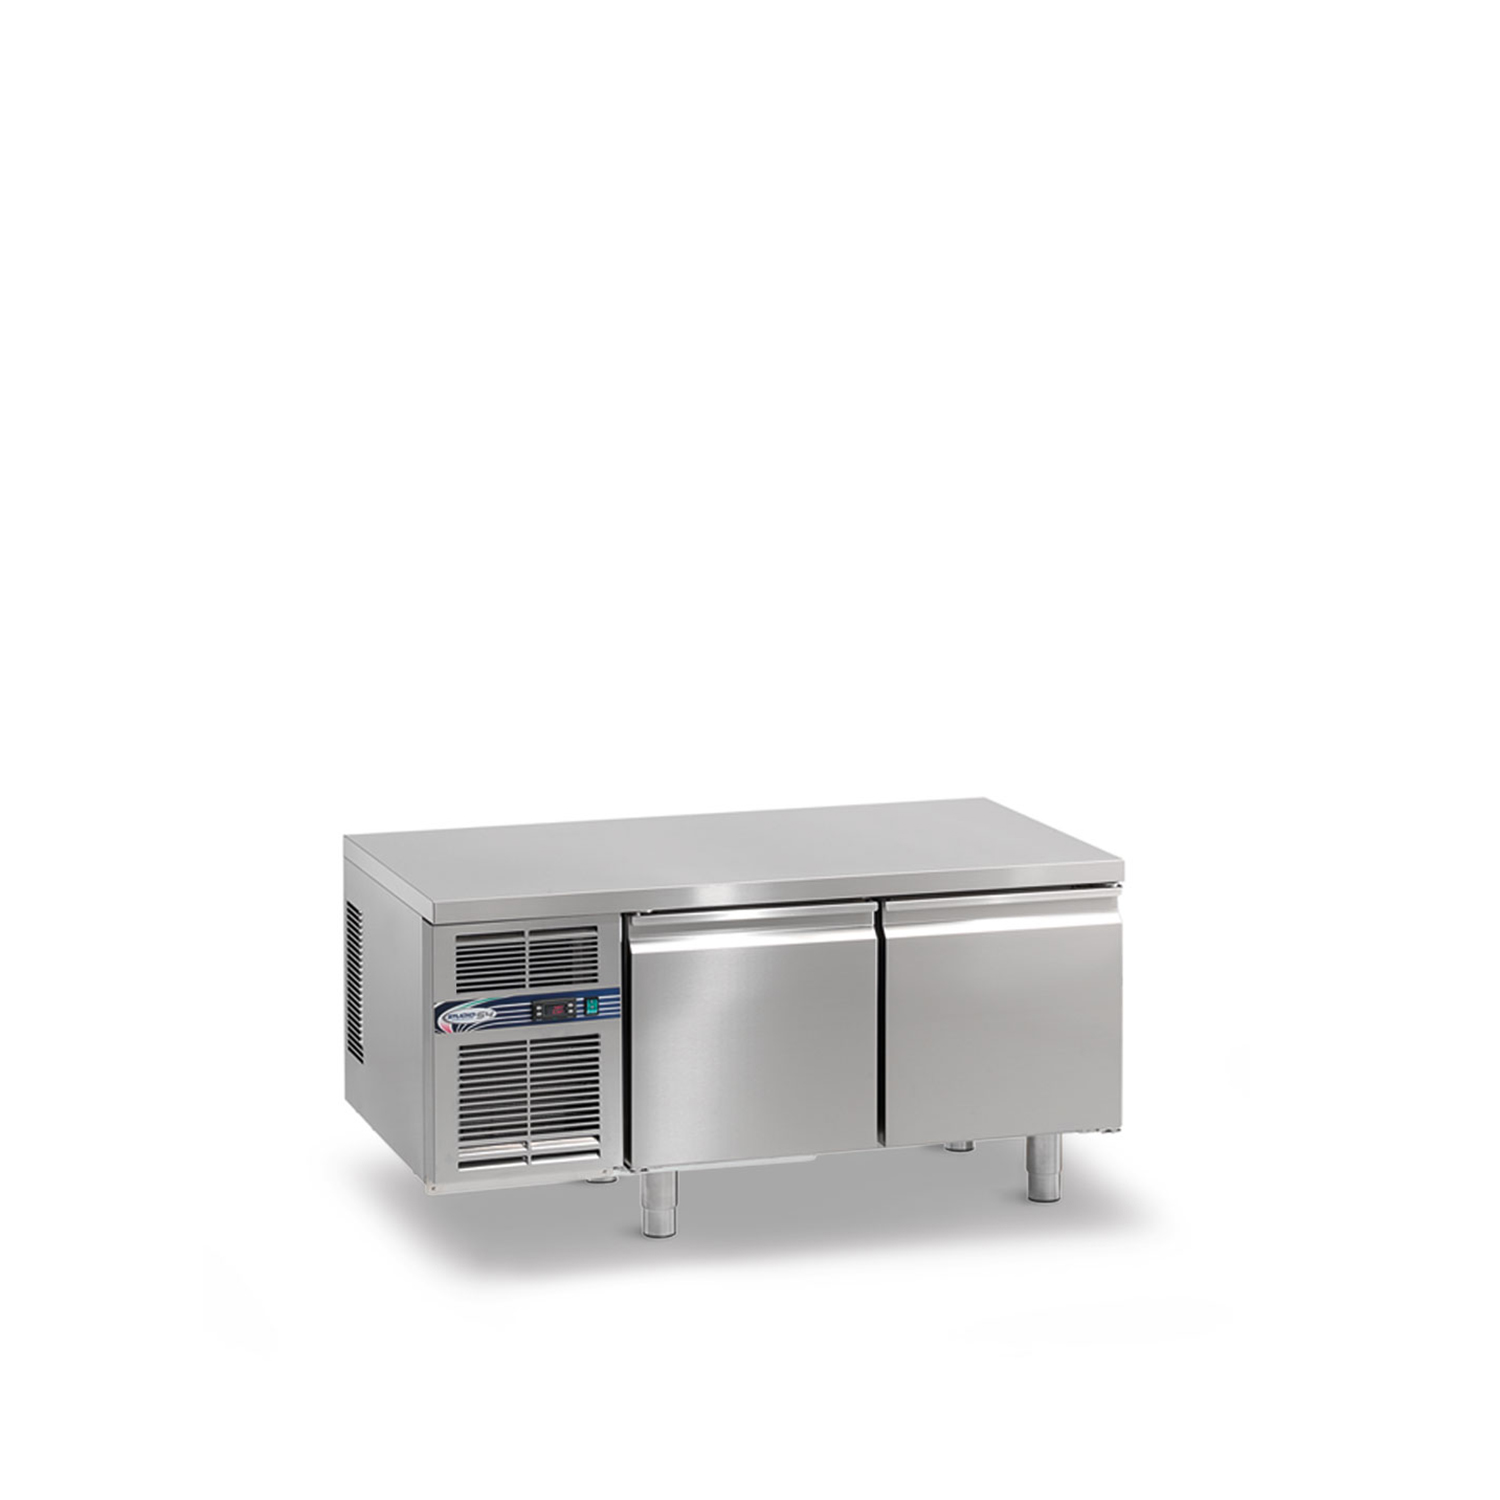 Kühltisch DAIQUIRI Top Line H450 GN 1/1, B 1280  x T 700 x H 640 mm, 2 Kühlfächer, Arbeitsplatte